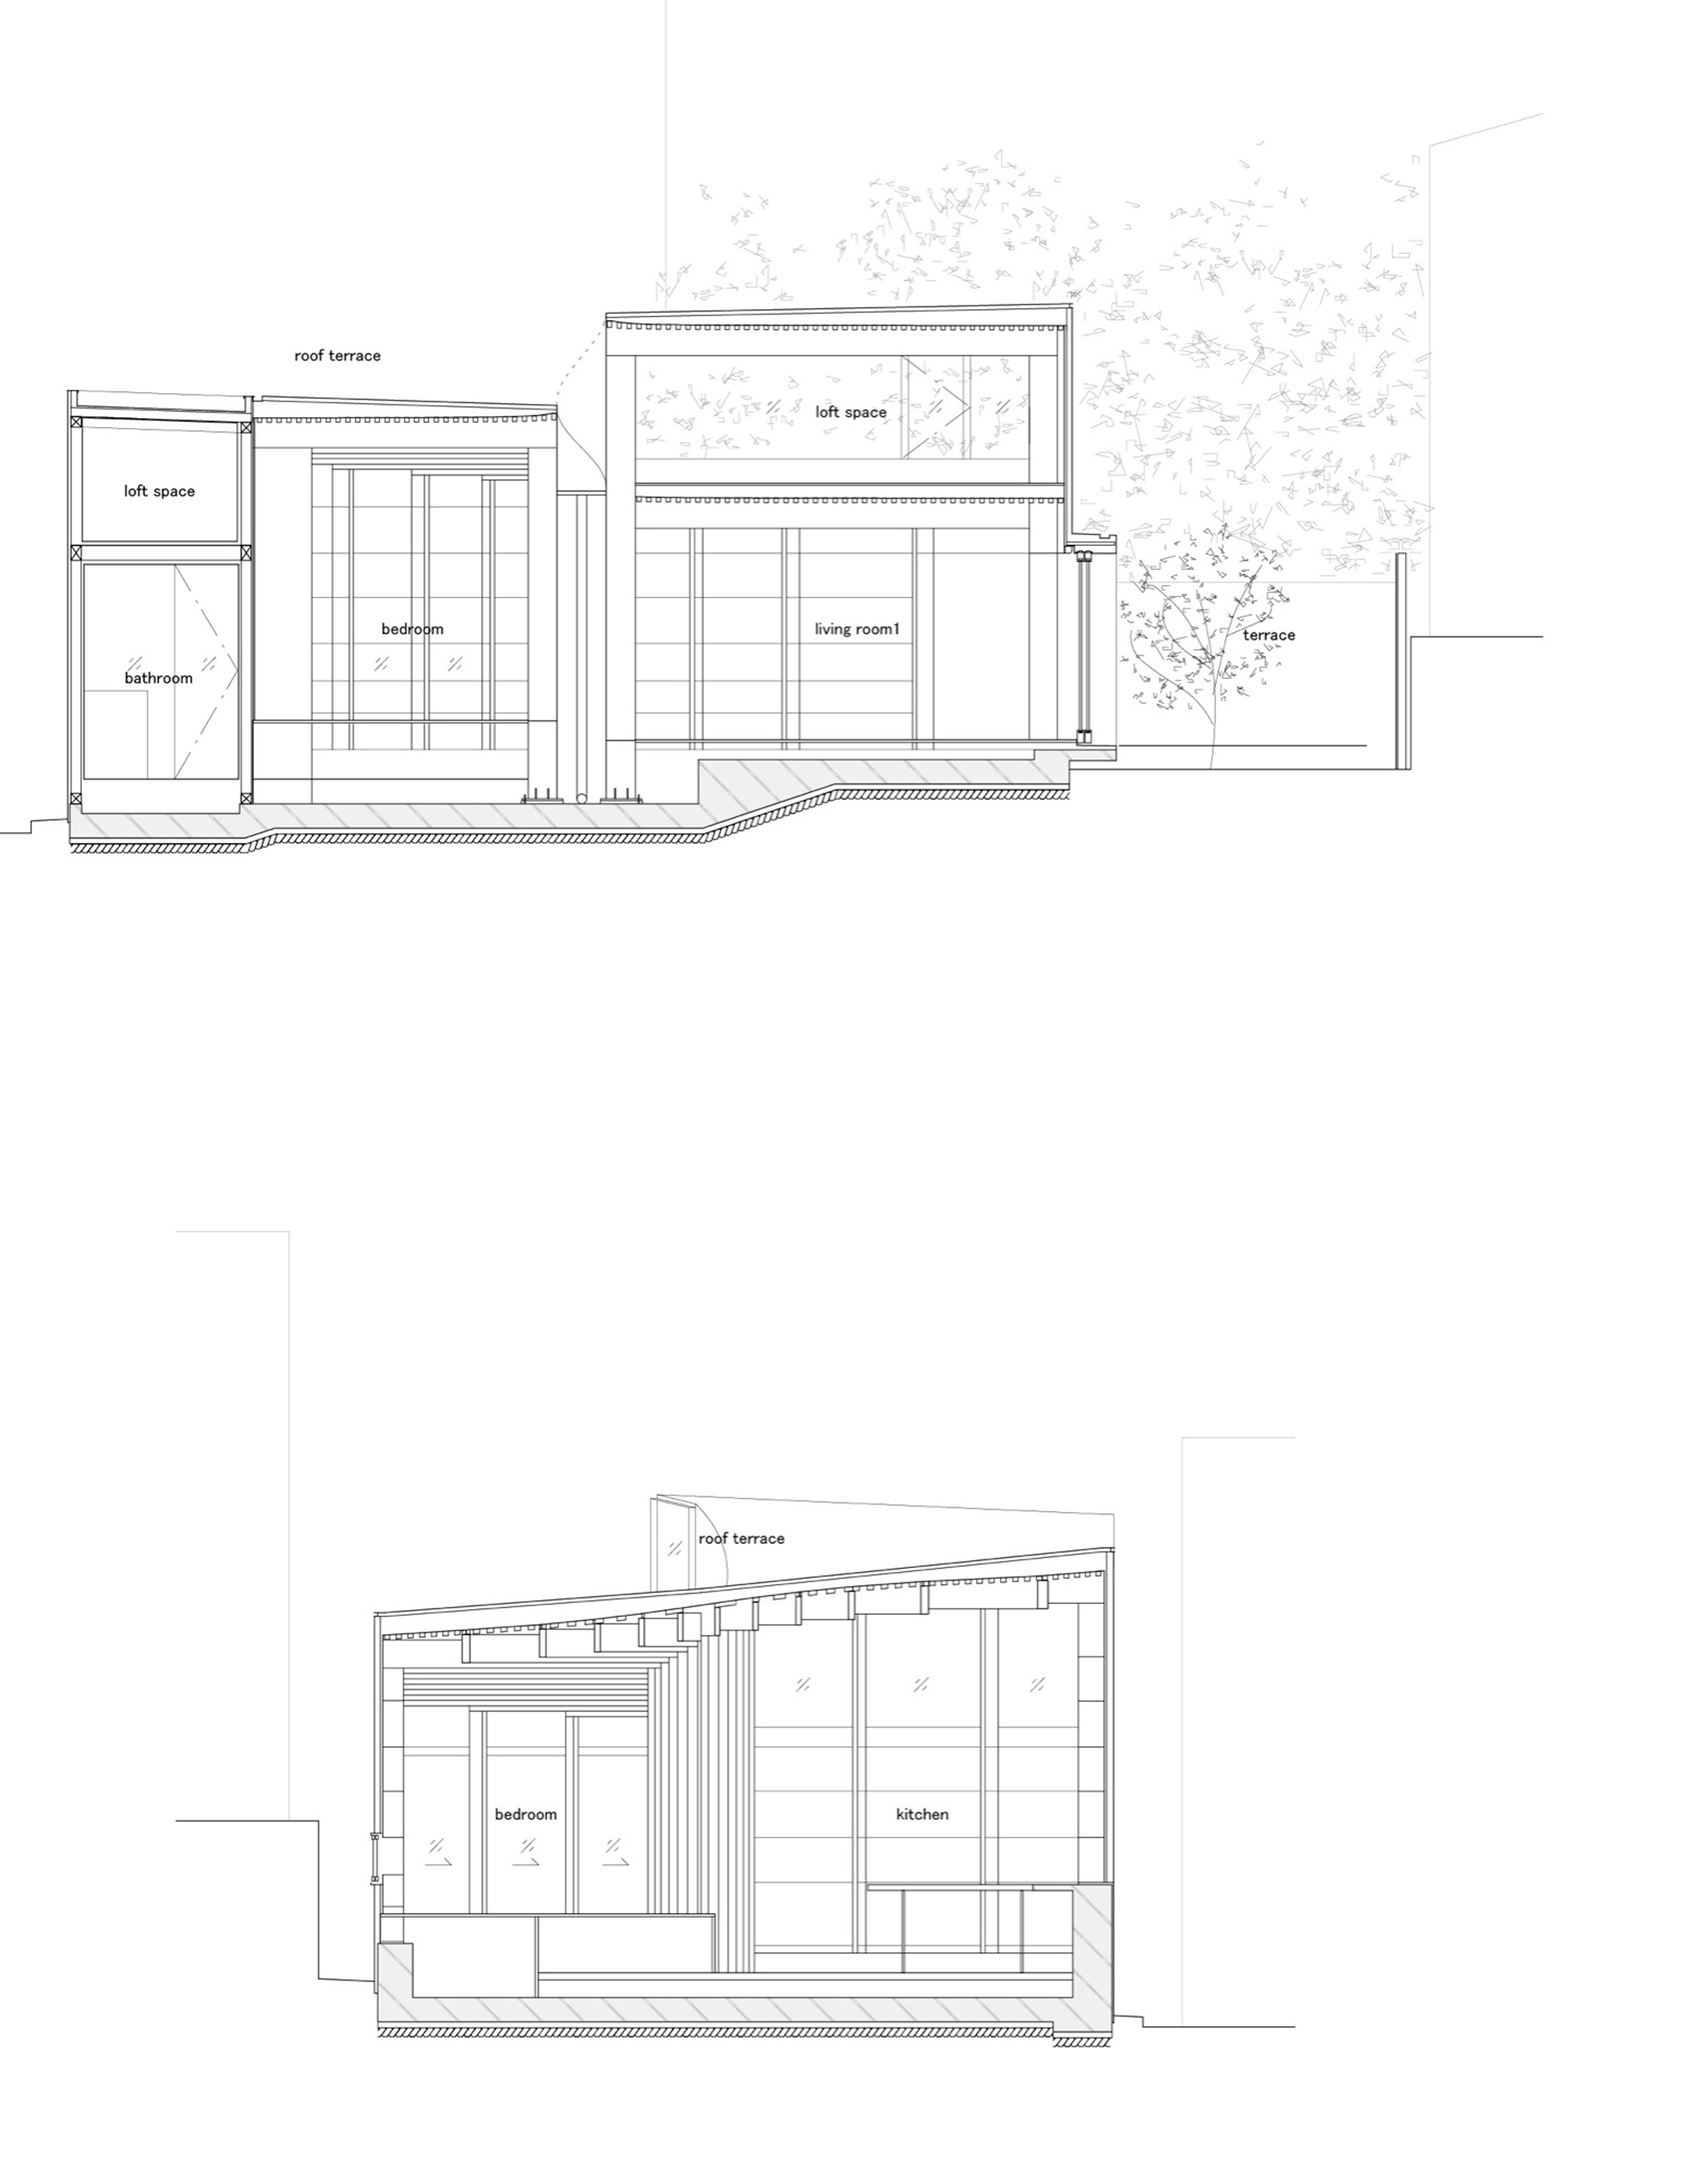 Tree House / Mount Fuji Architects Studio (2)